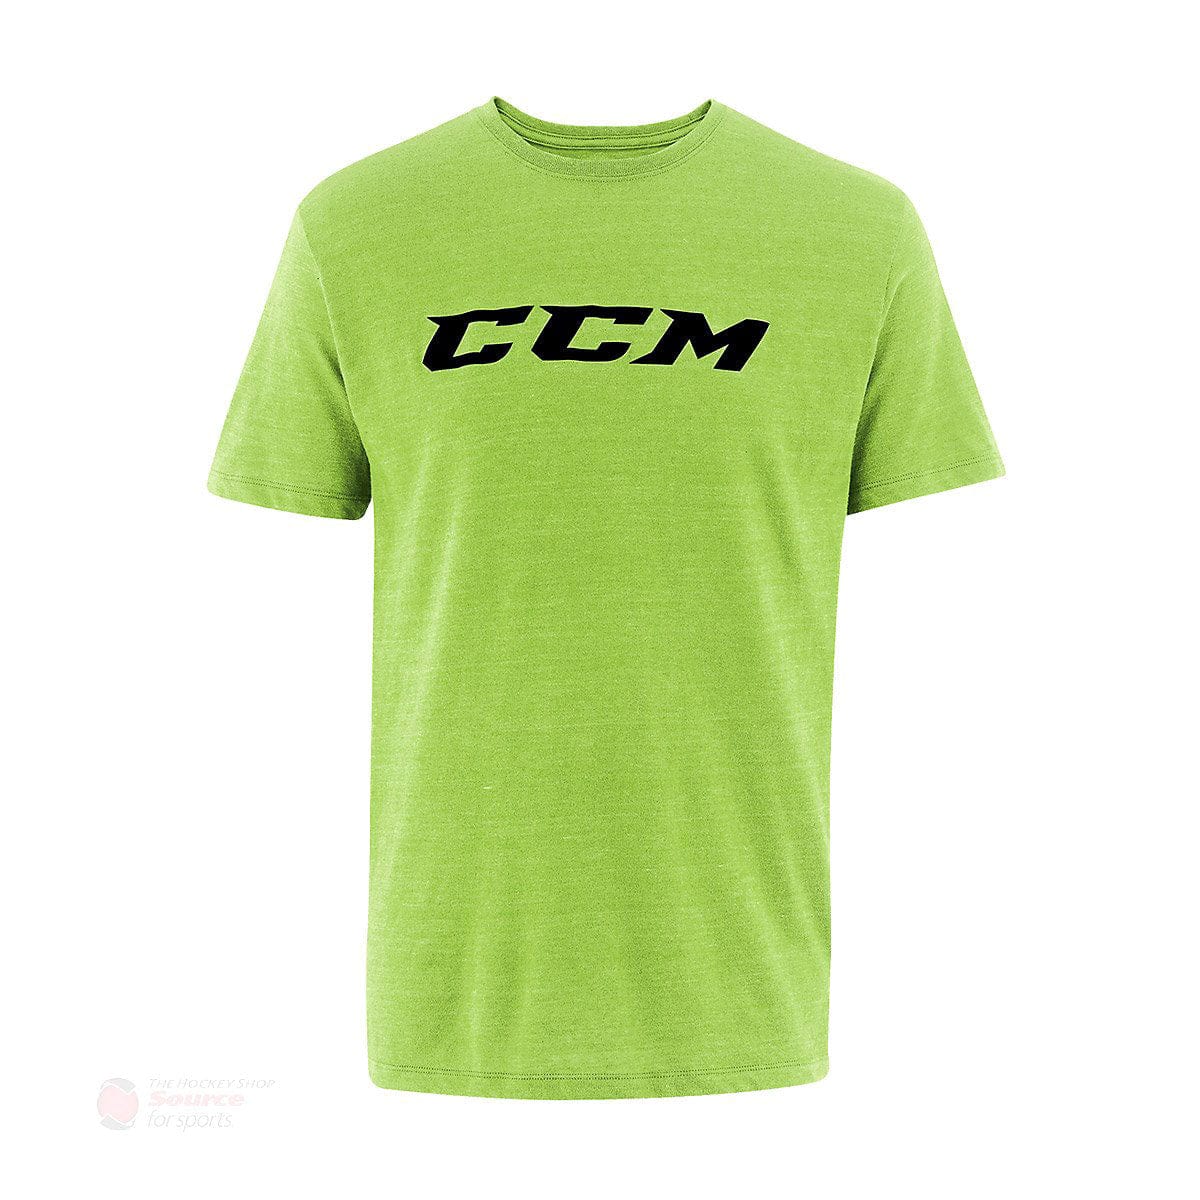 CCM Tri-Blend Logo Mens Shirt